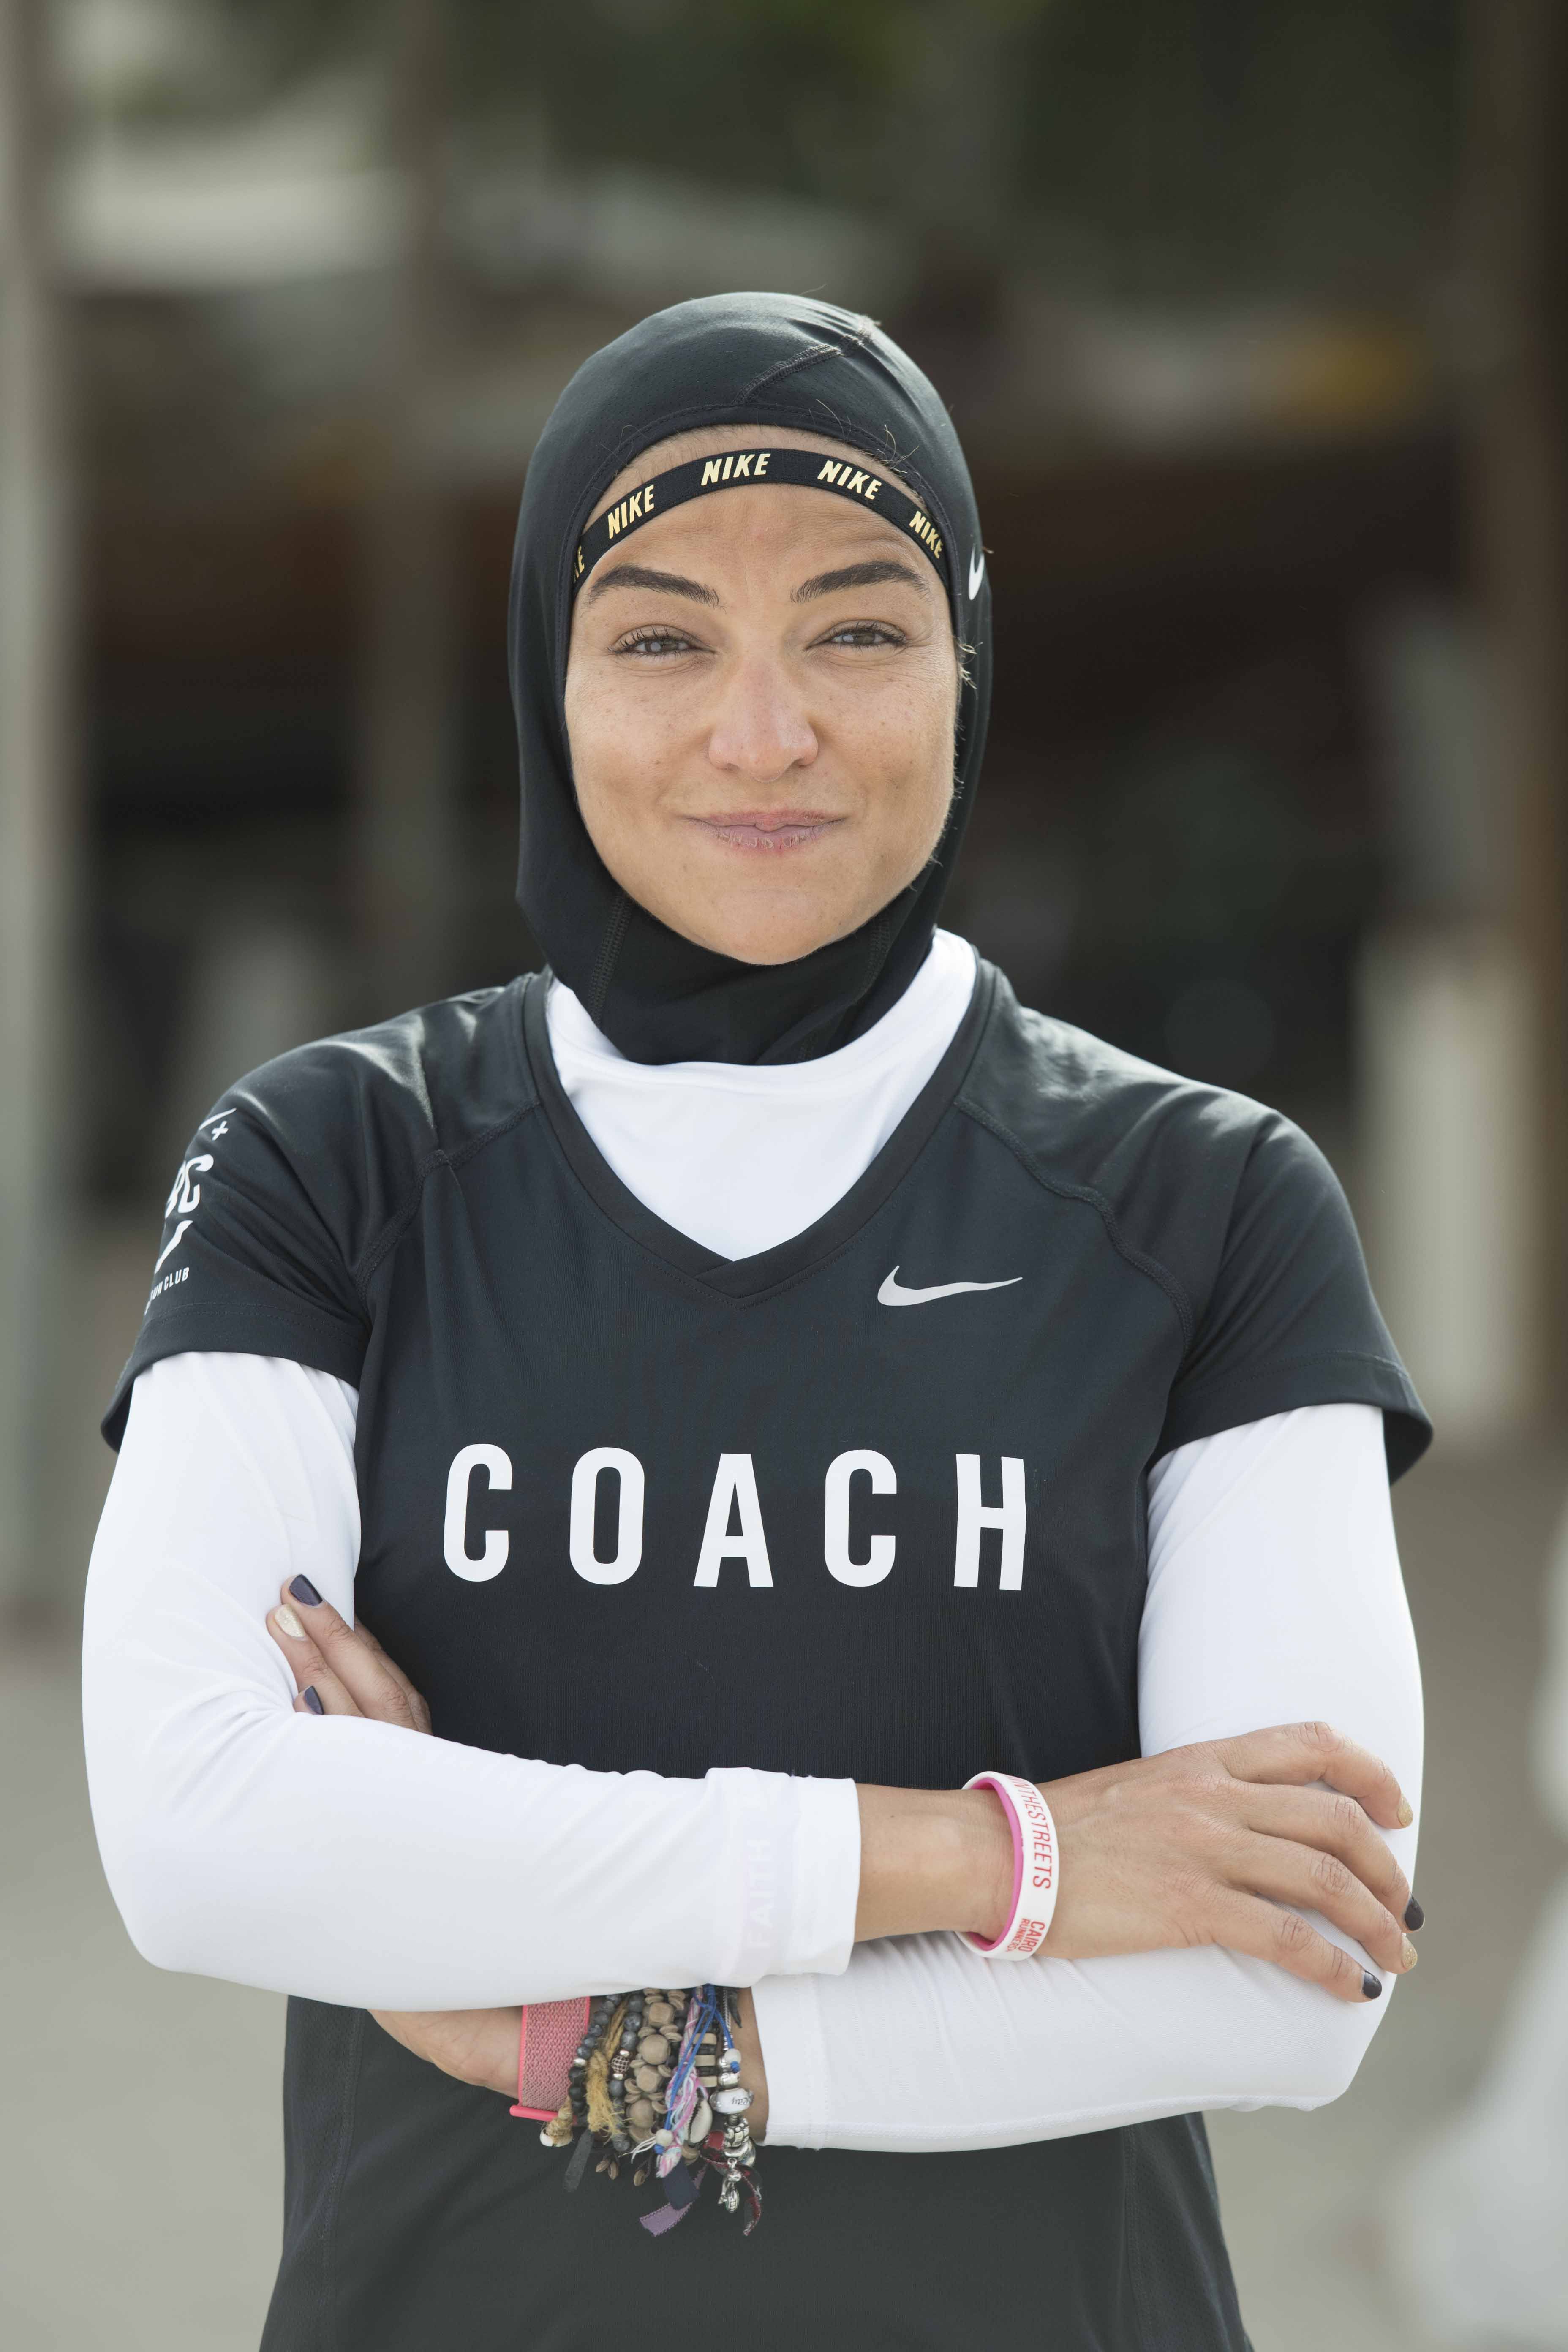 Nike's first Hijab model and coach to London Marathon 2019